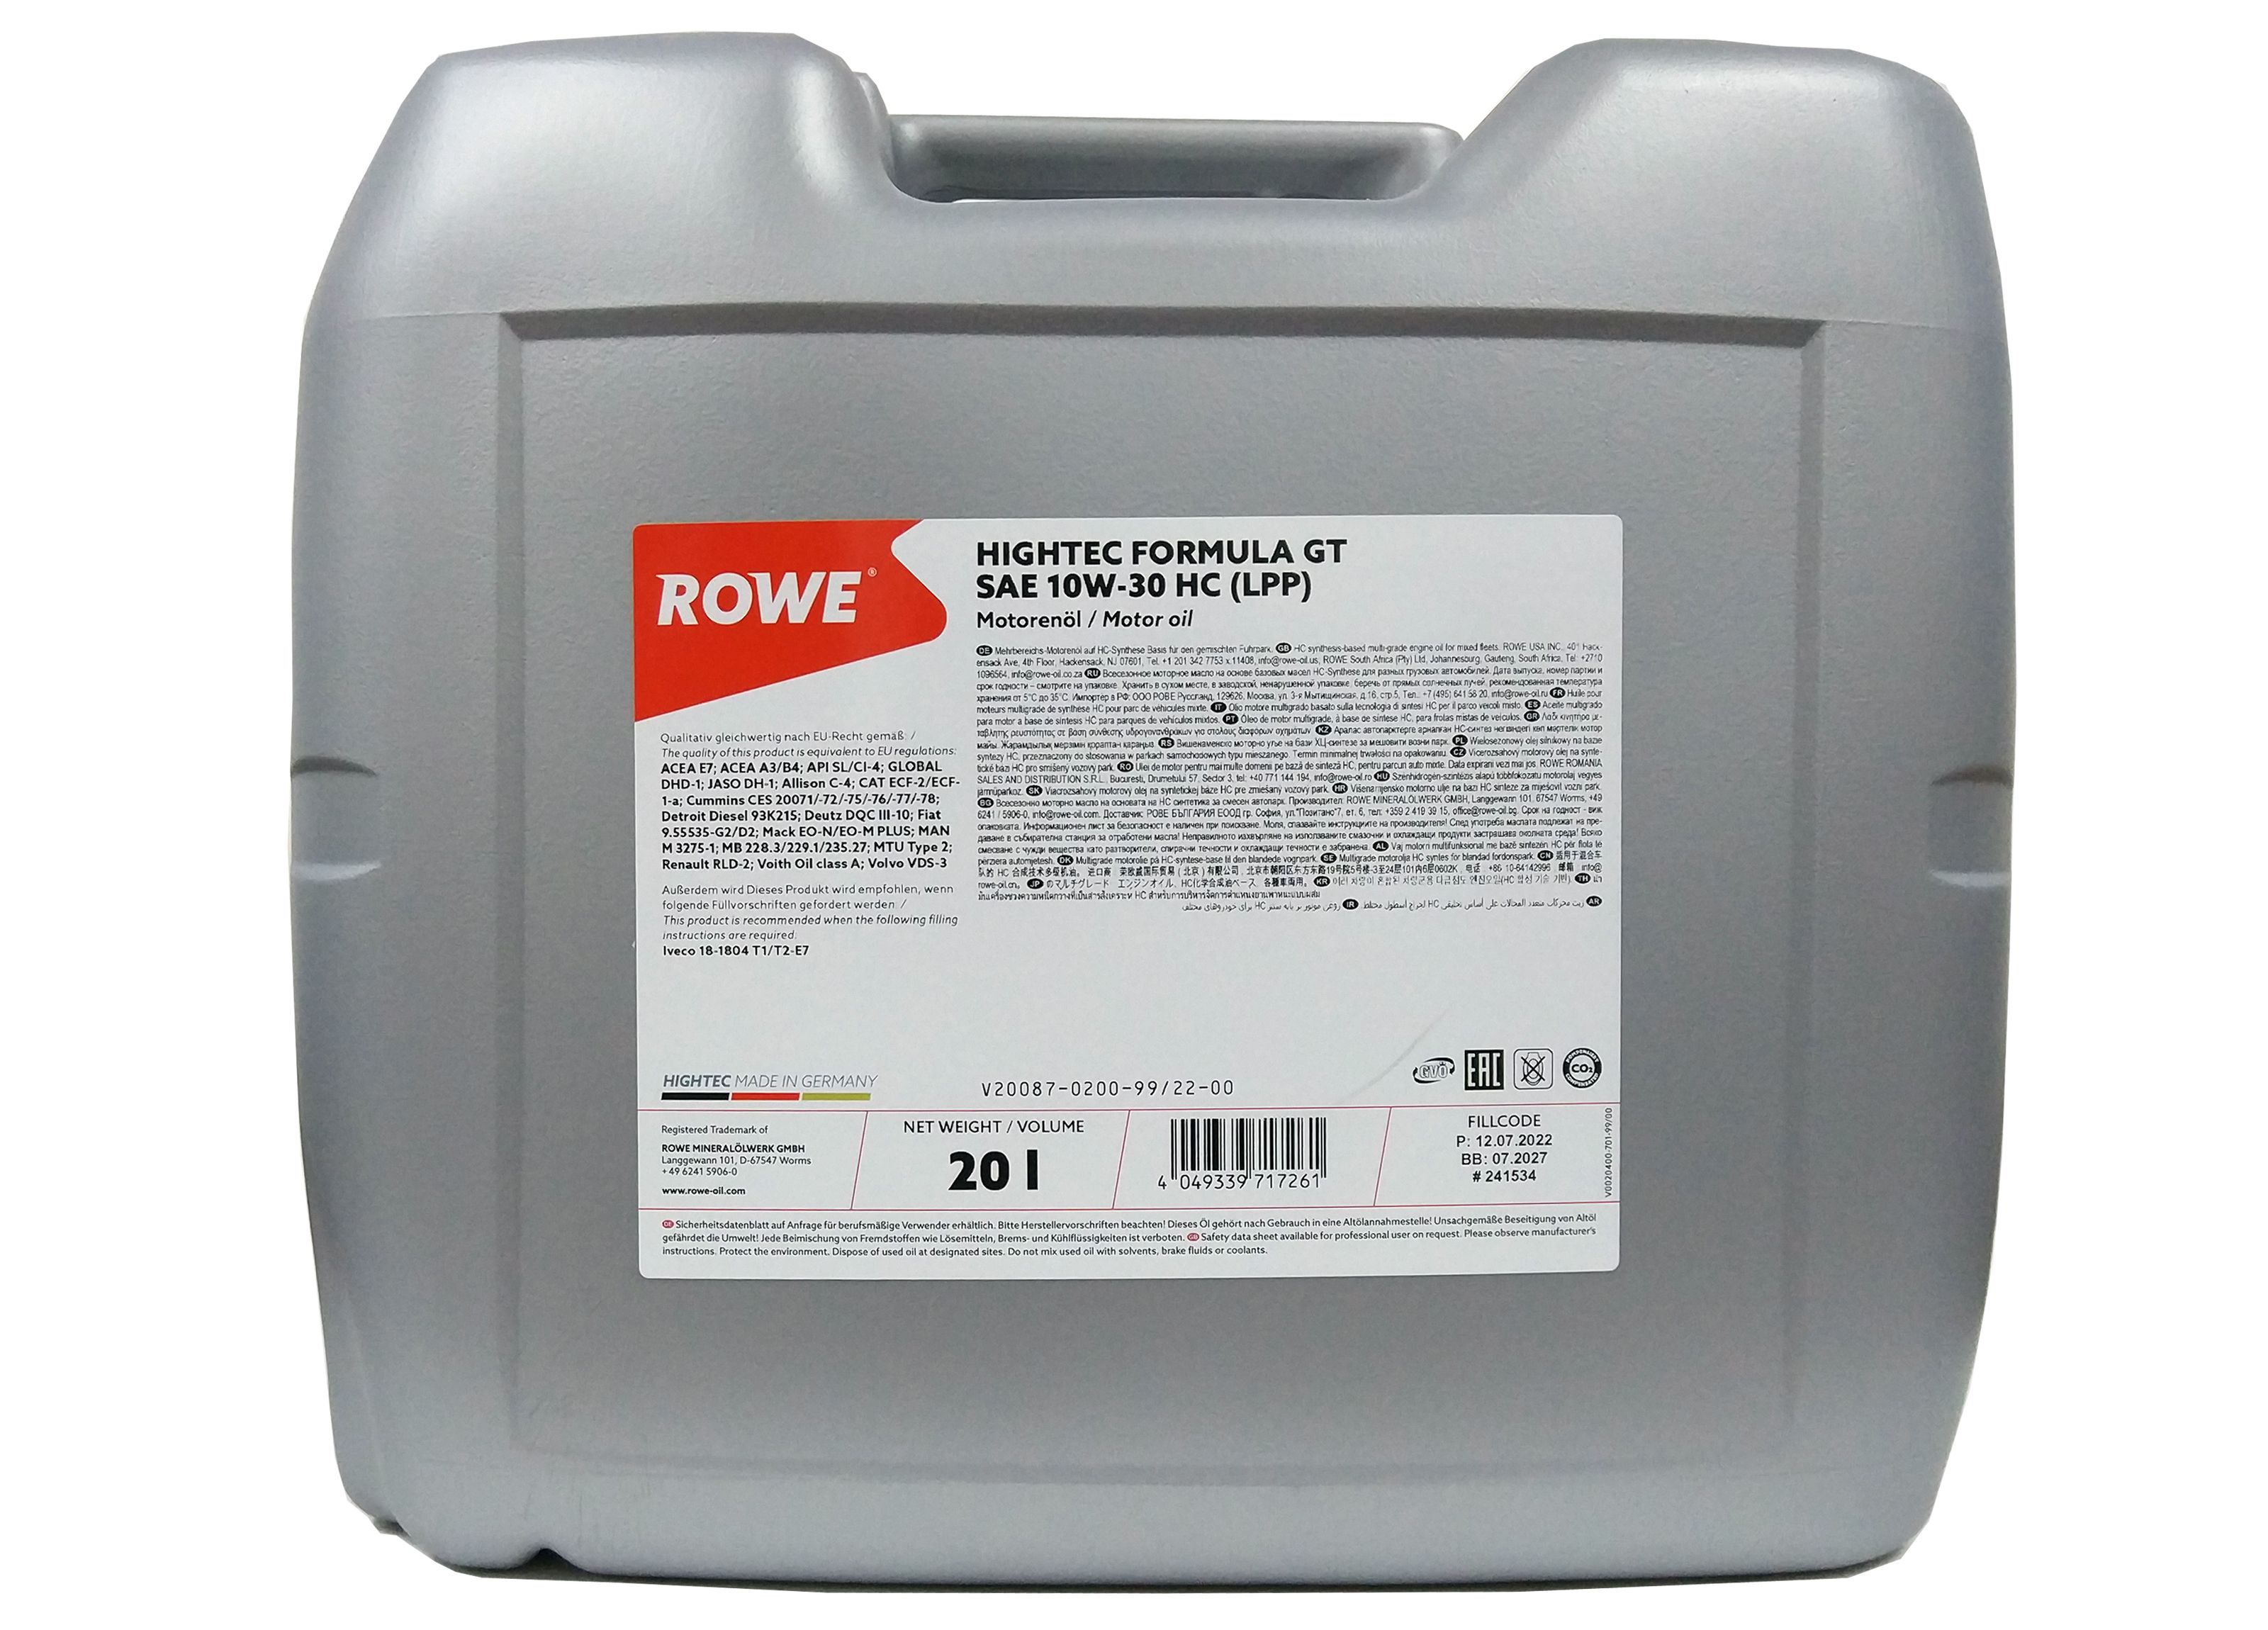 Rowe atf. Rowe ATF 9000. Моторное масло Rowe 10w30. Моторное масло Rowe 10w 40. Suprema Formula gt 10w-40 HC.